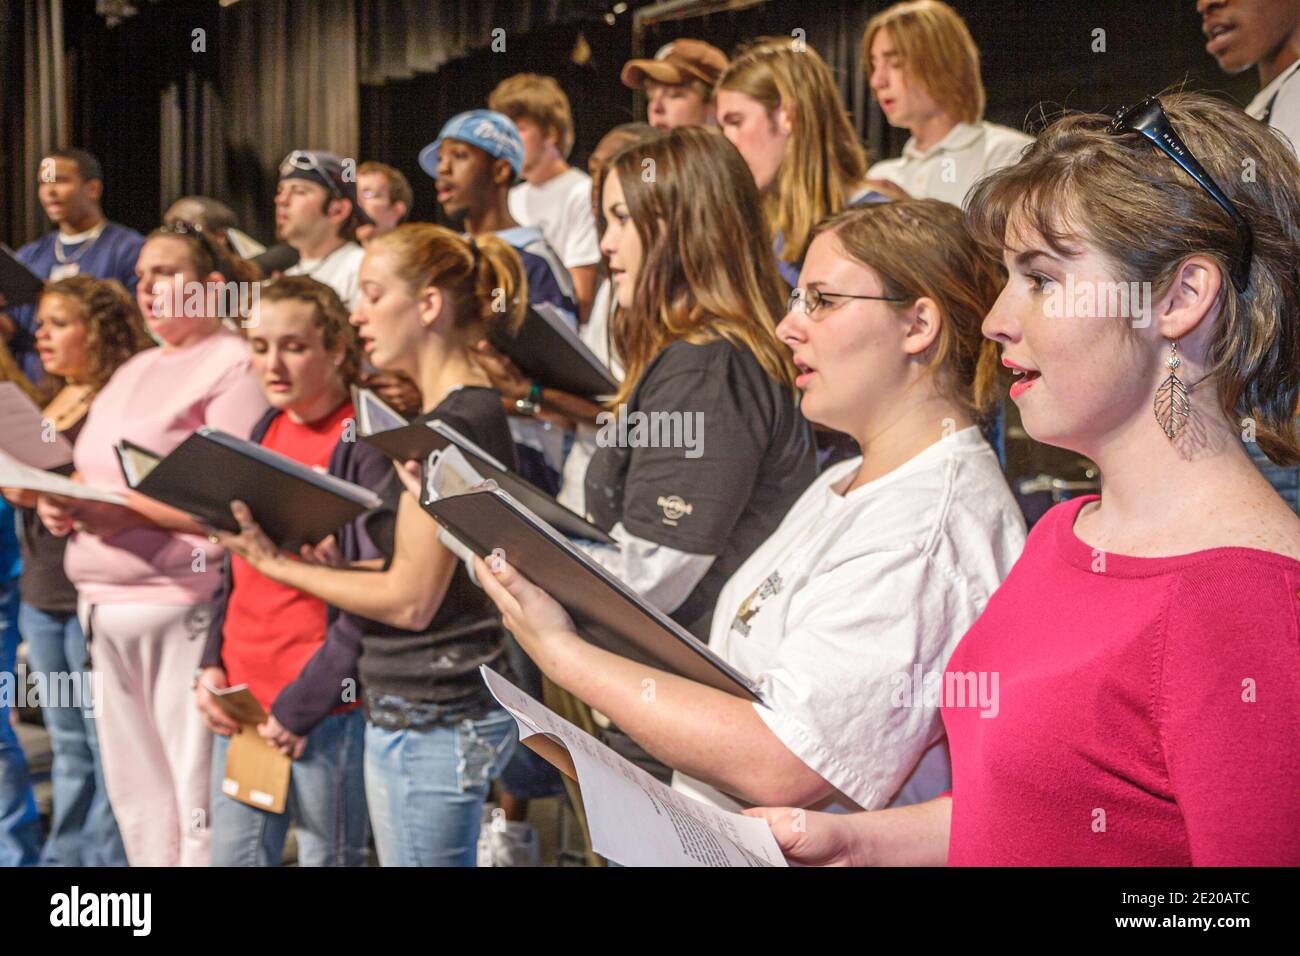 Alabama Monroeville Alabama Southern Community College campus James Nettles Auditorium, studenti coro pratica prove cantando donne femmina Foto Stock